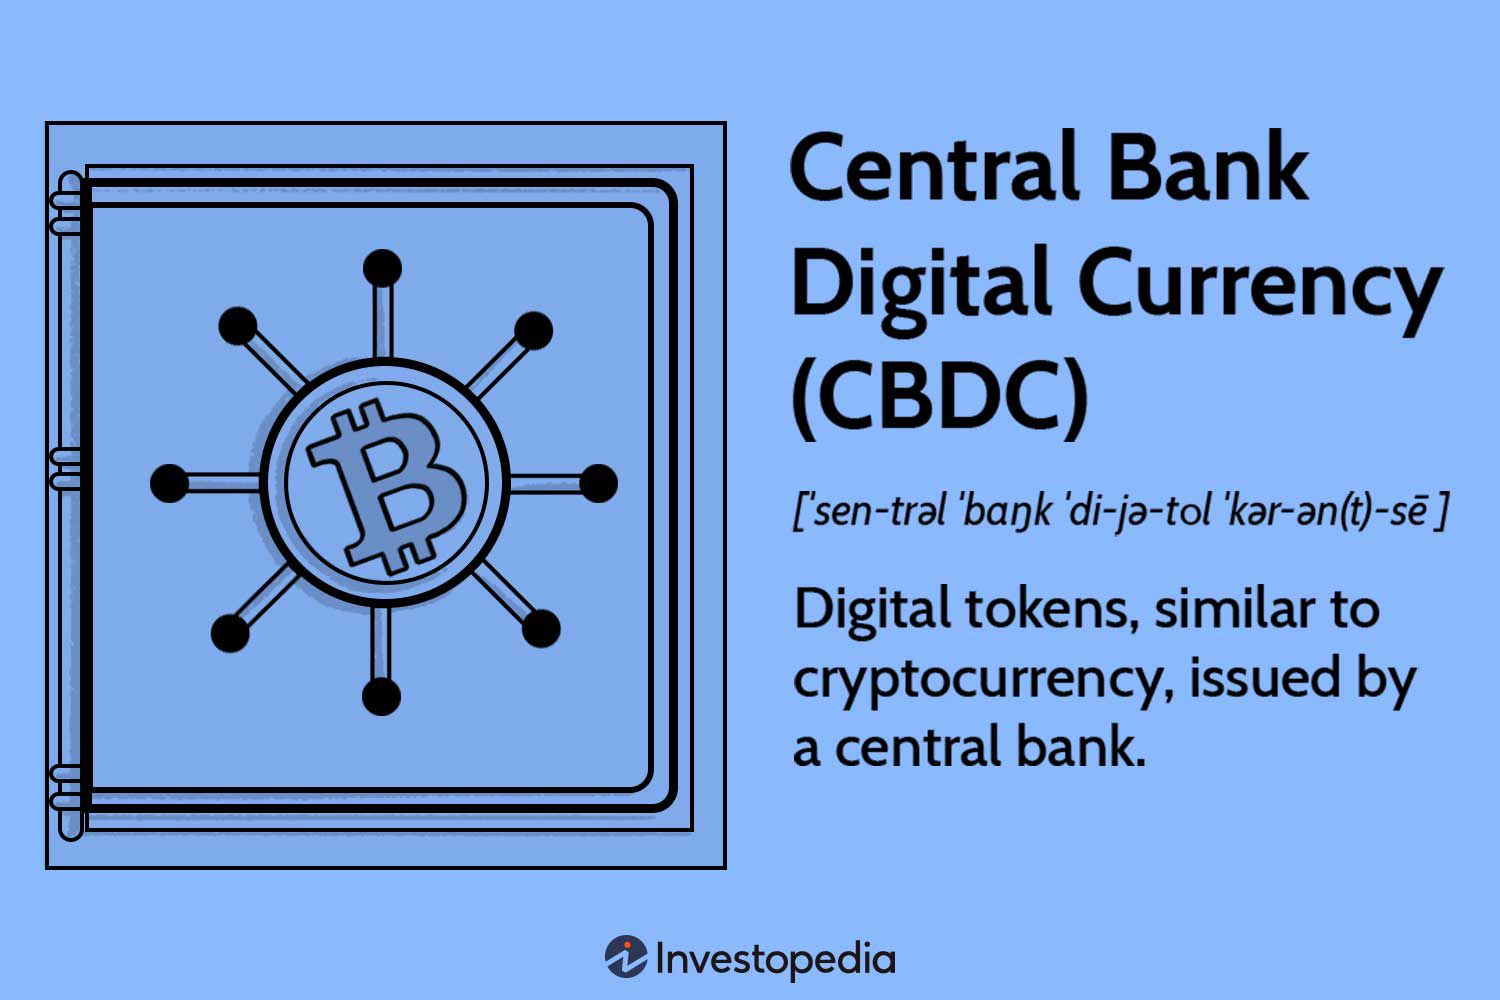 terms_c_central-bank-digital-currency-cbdc_final-671aefb2905b407583007d63fa46e49d.jpeg